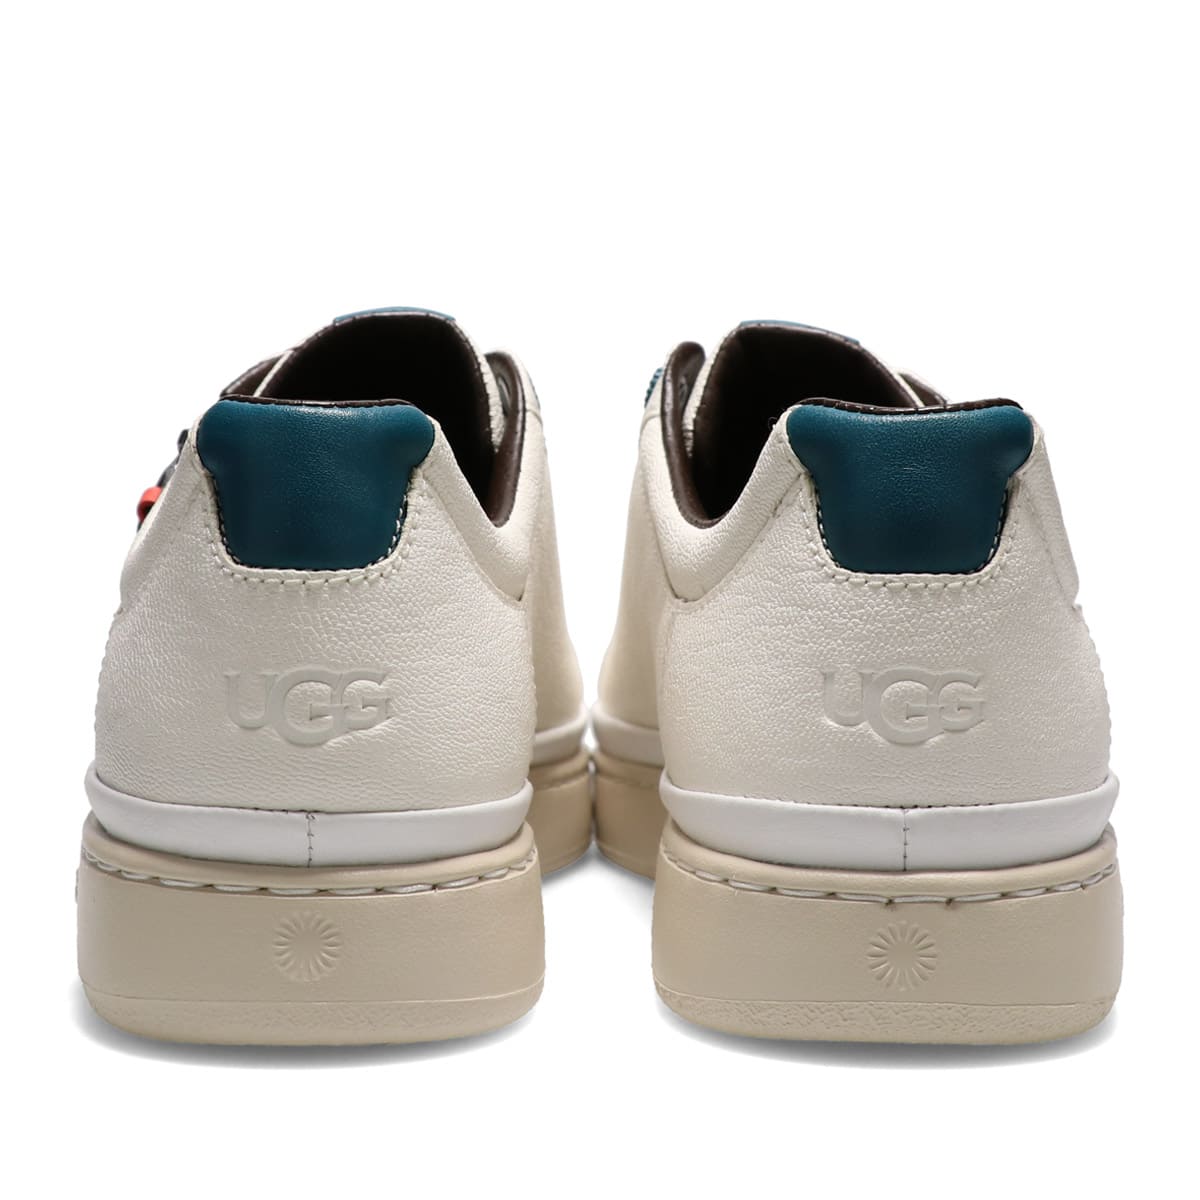 UGG Cali Sneaker Low Side Zip WHITE / MARINA BLUE LEATHER 21FW-I